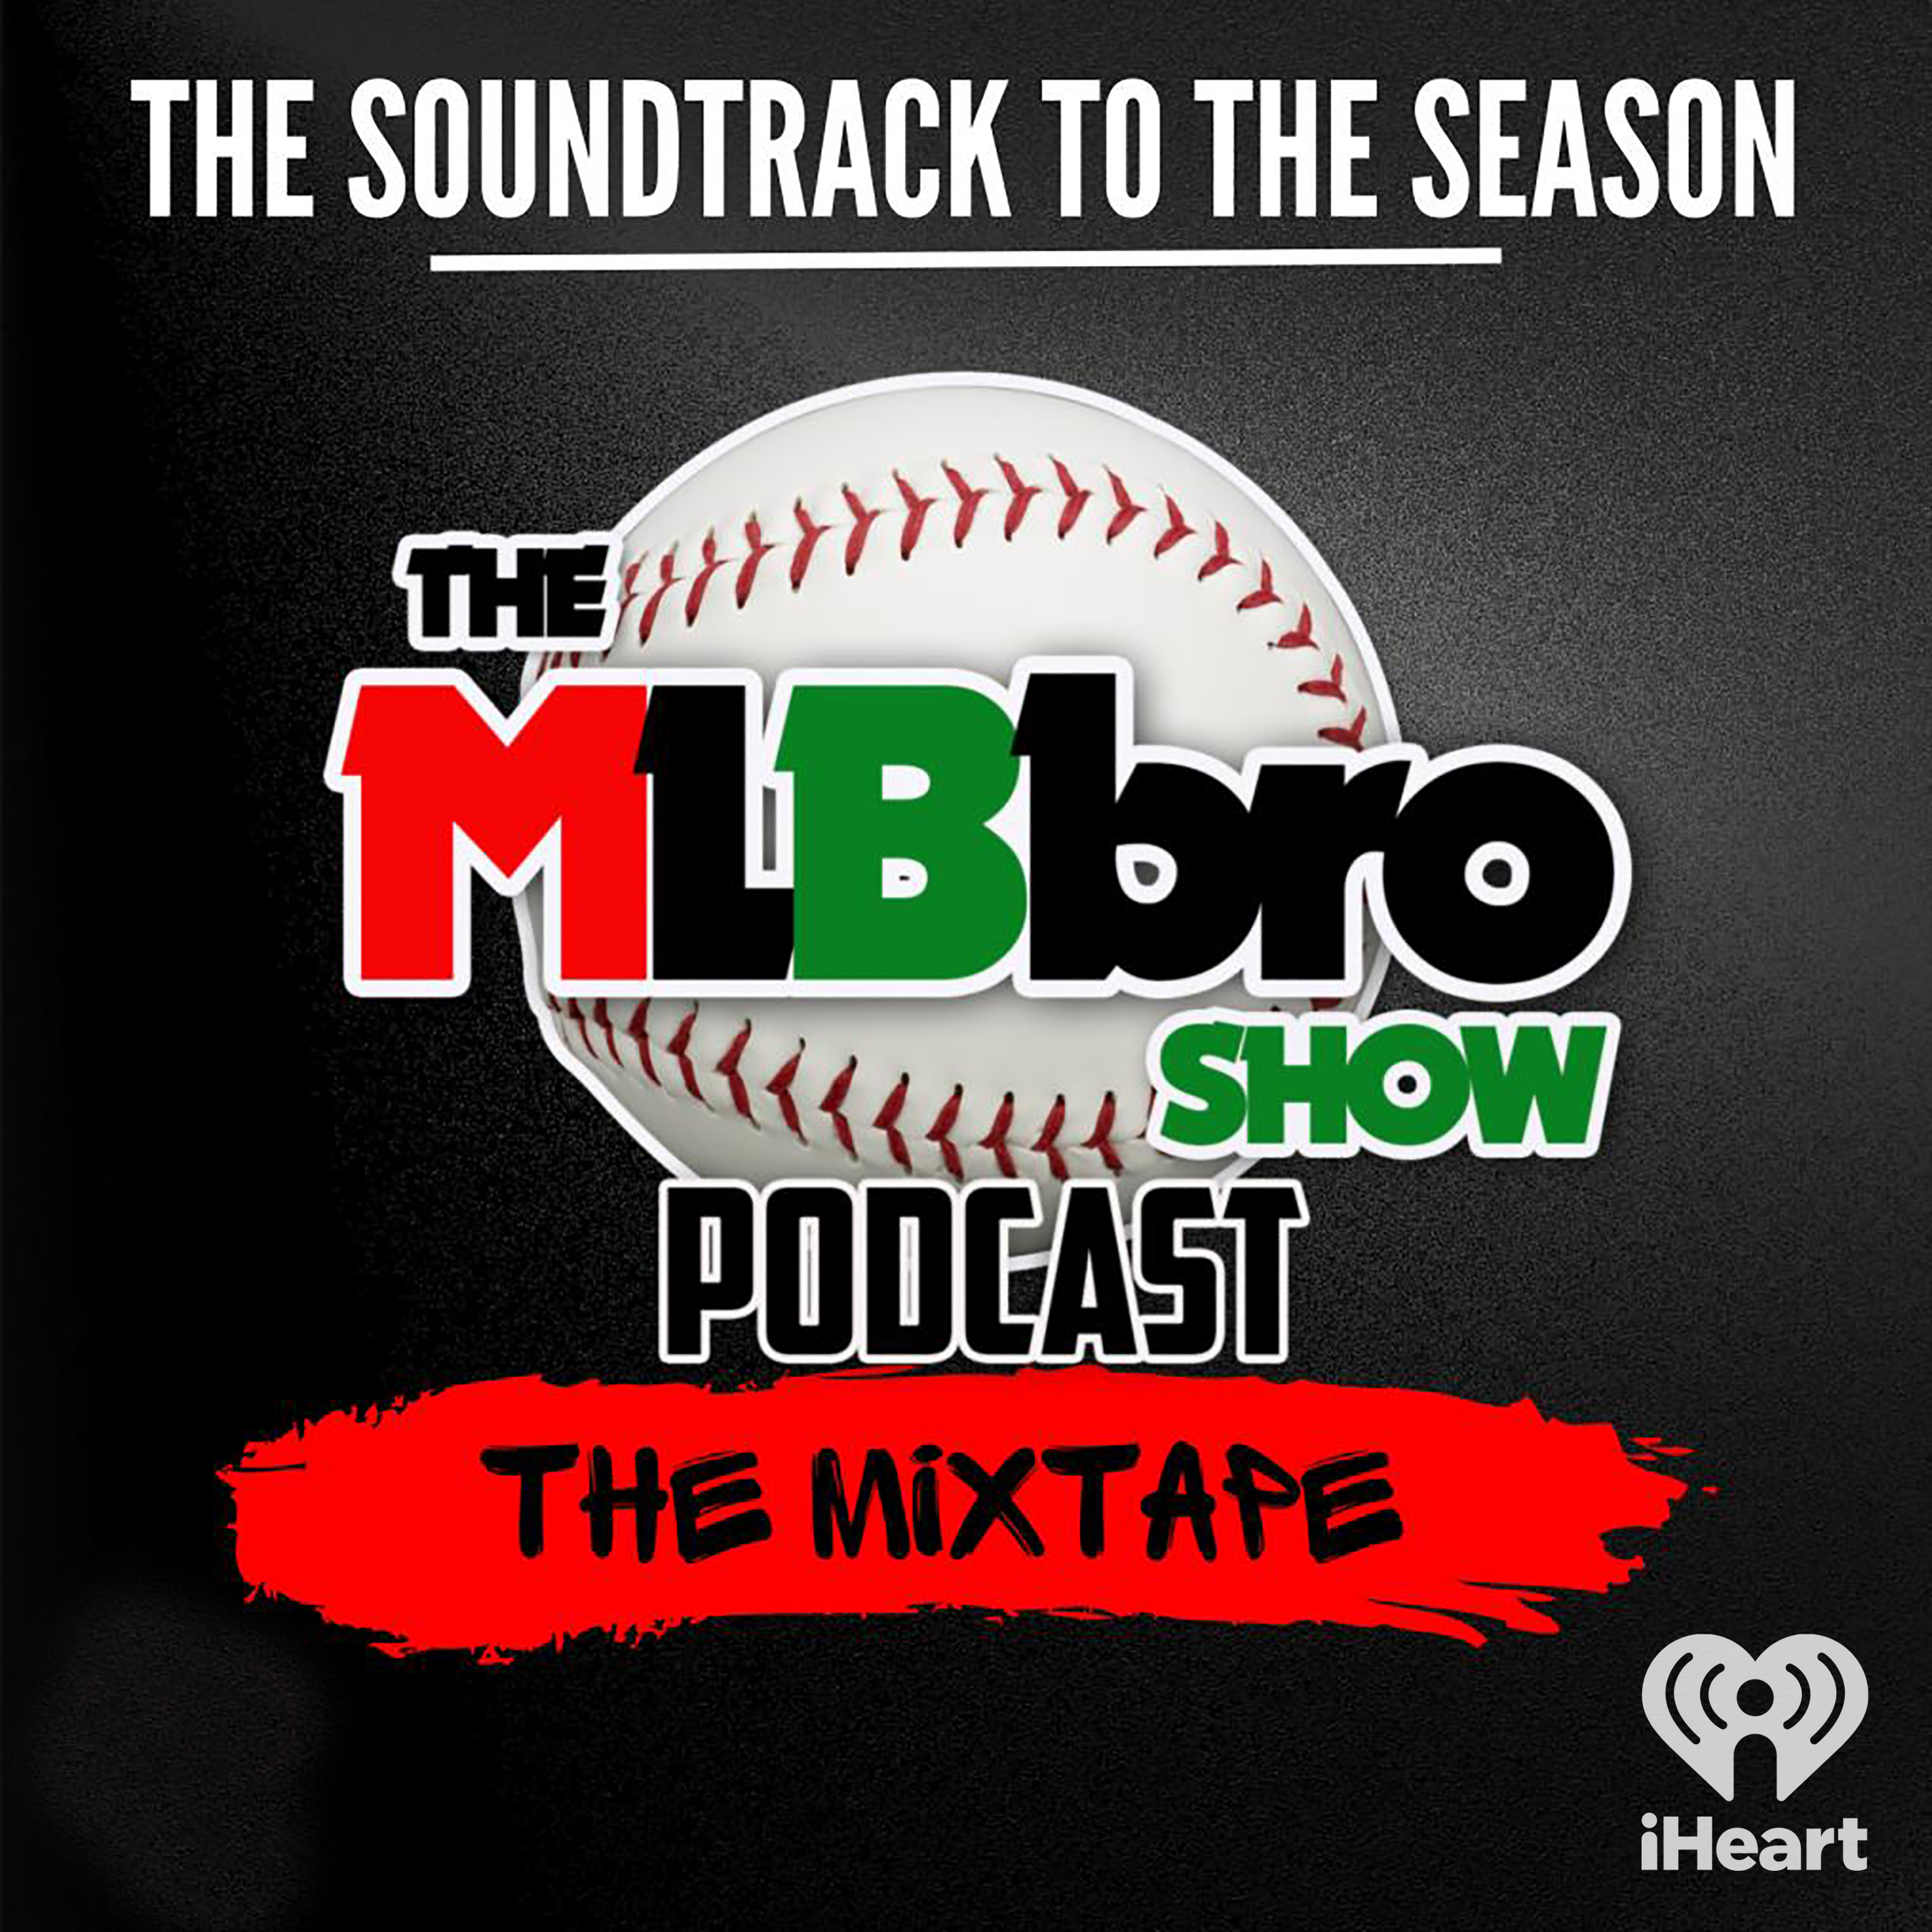 MLBbro Show Podcast The Mixtape Vol 3 Episode 14